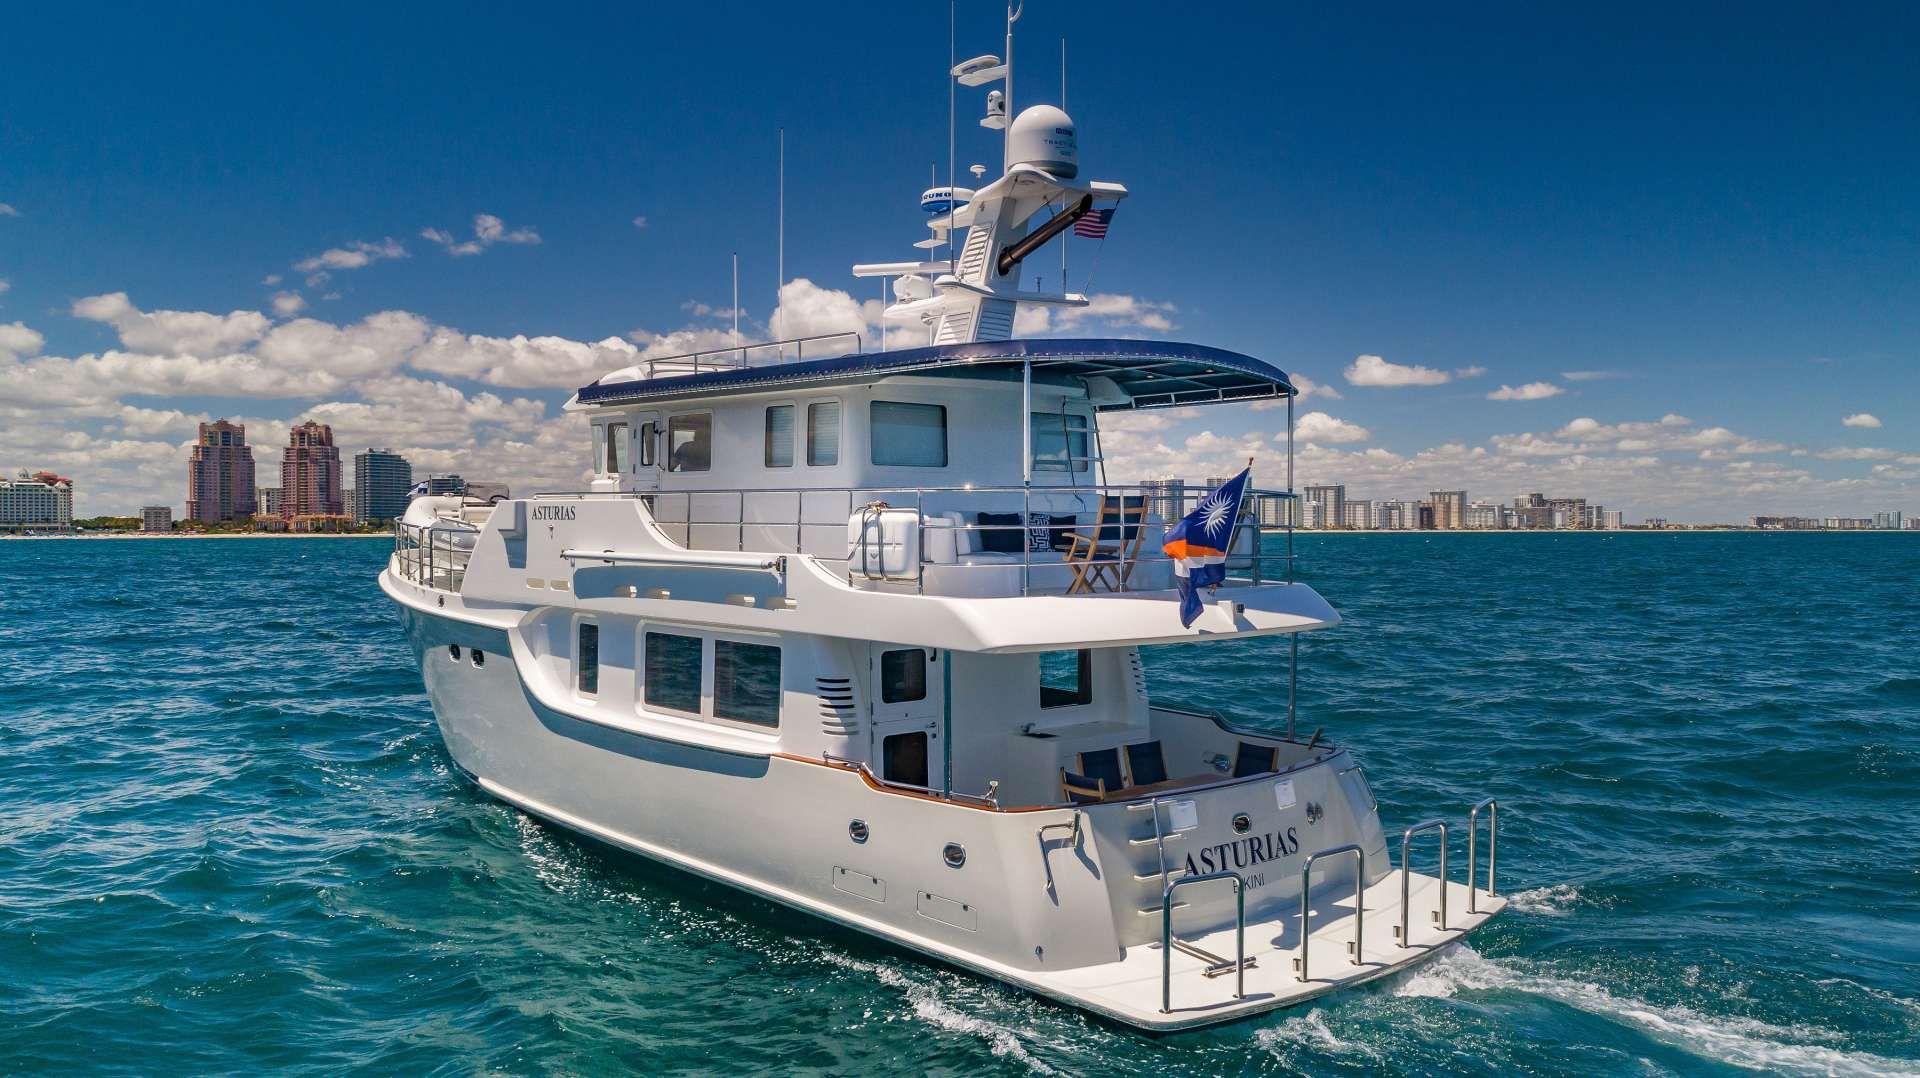 ASTURIAS Yacht Charter - Running Profile